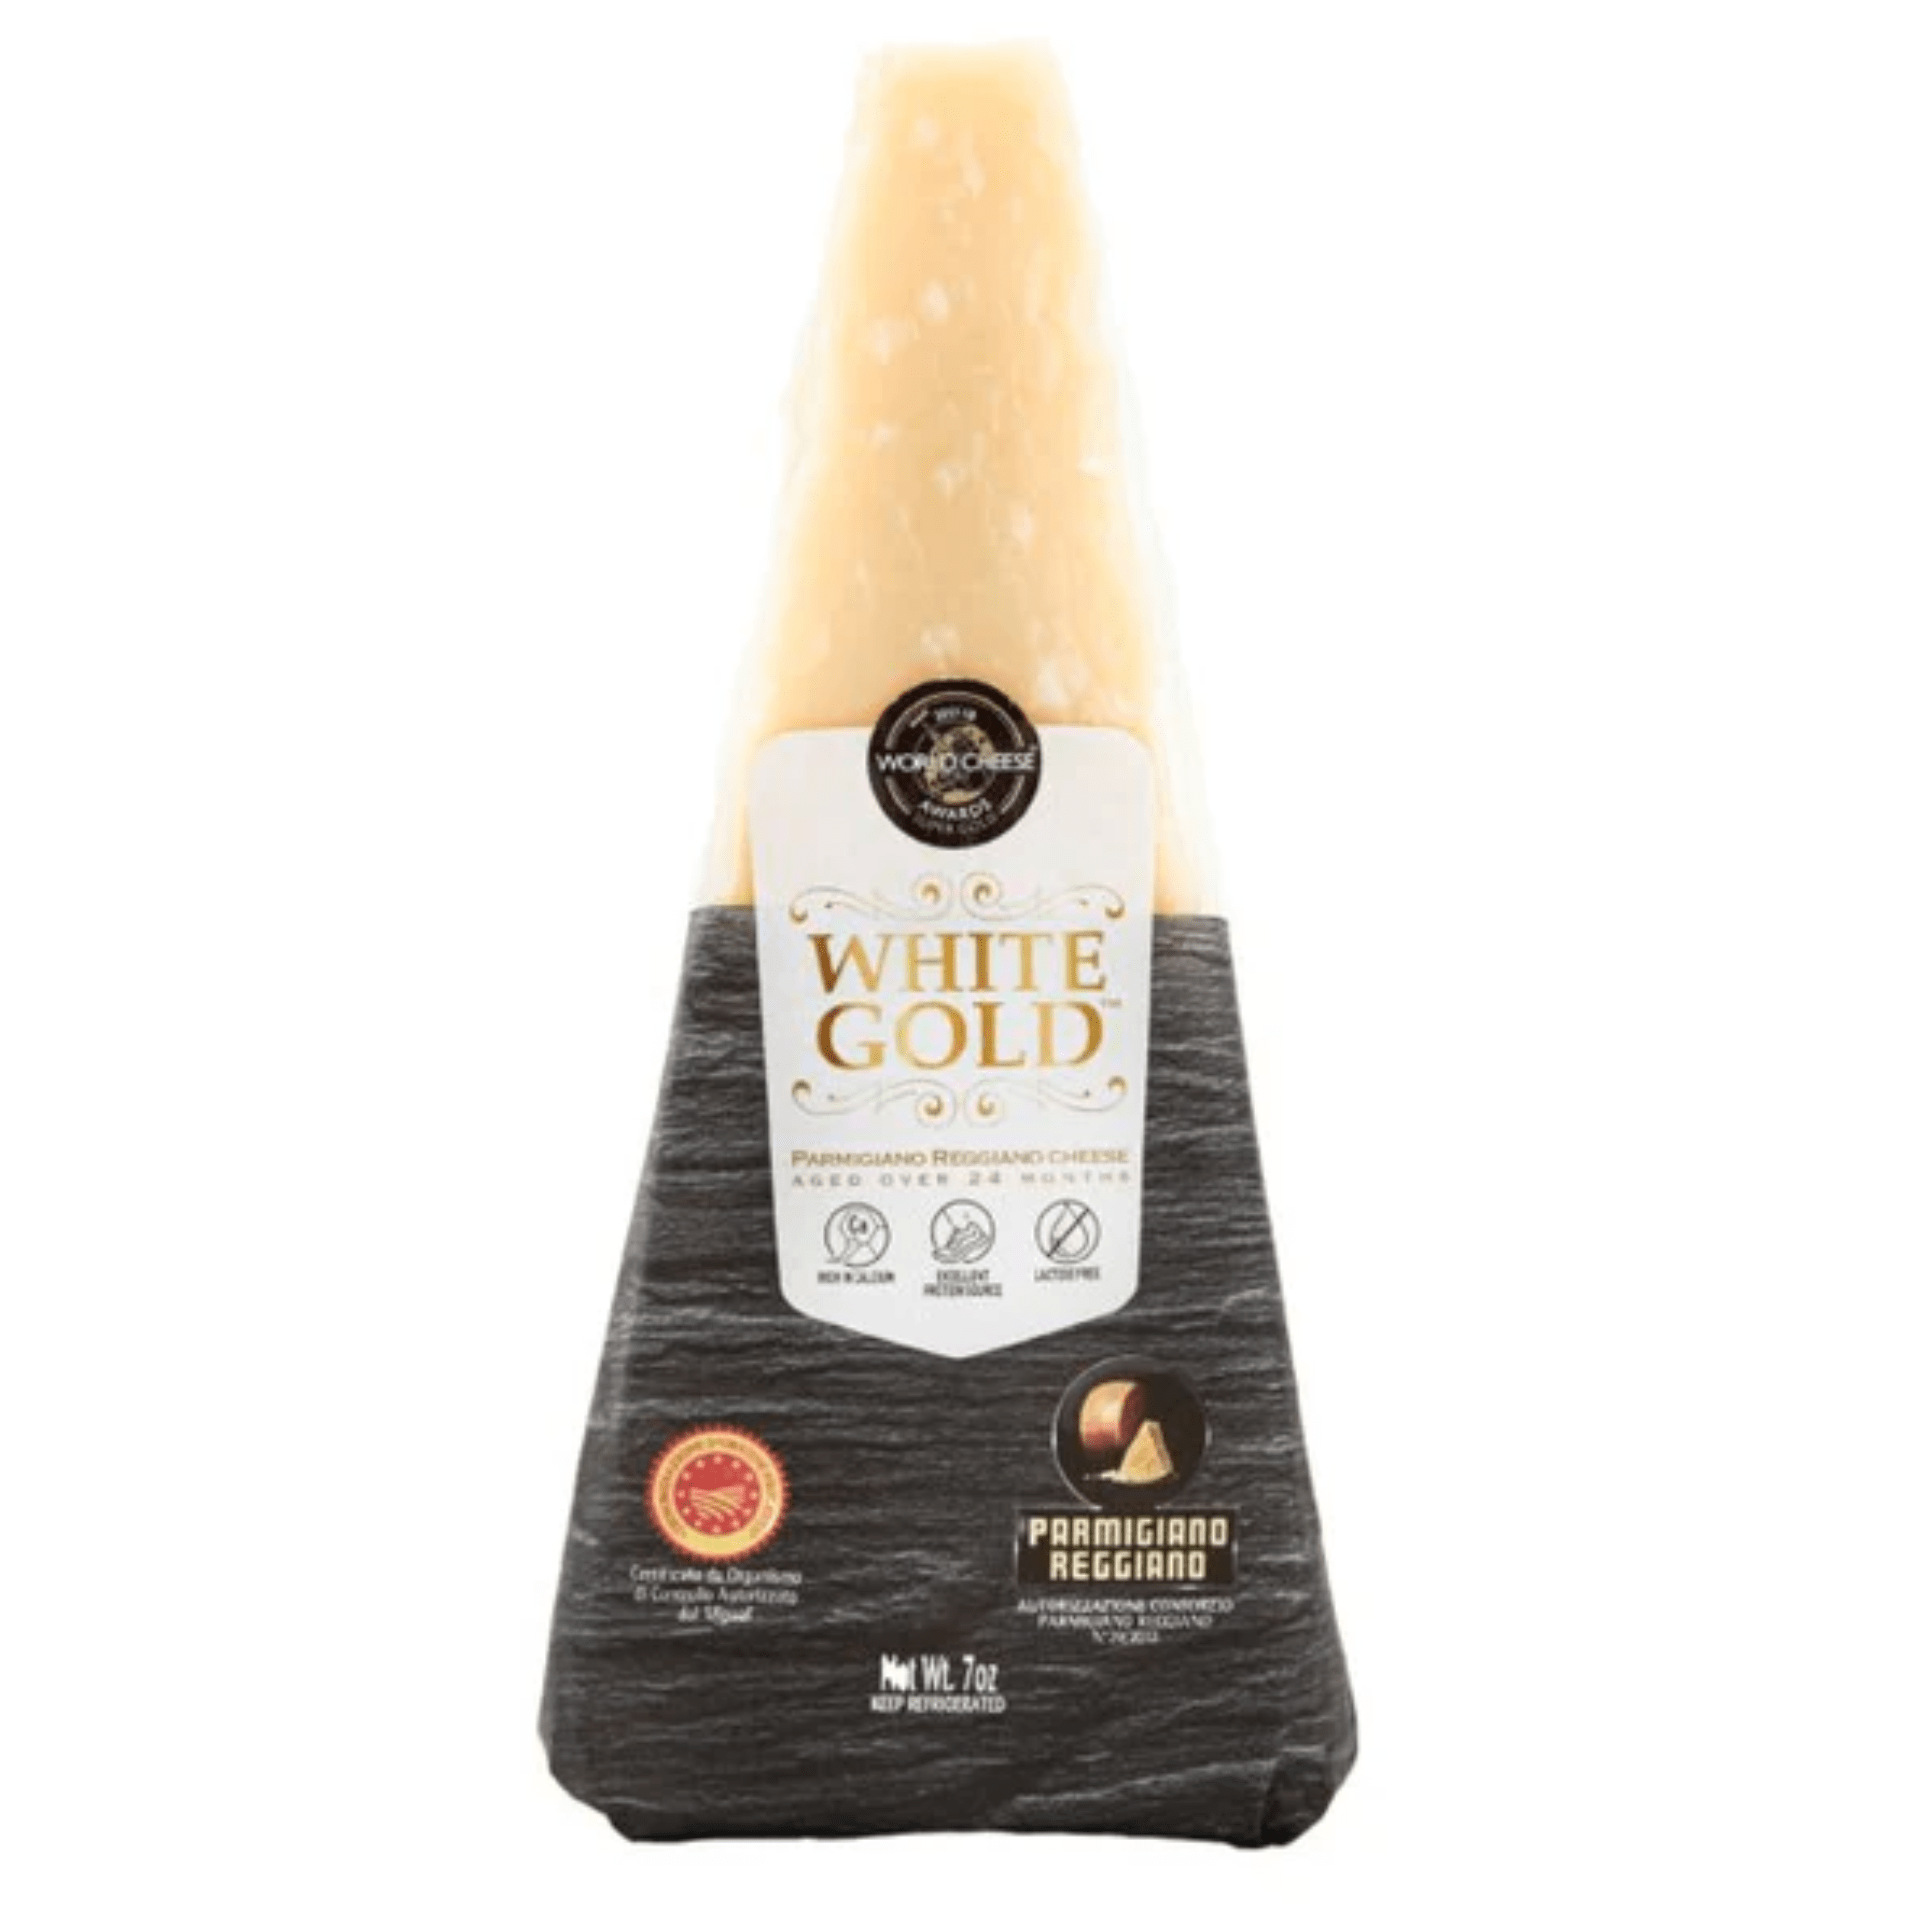 White Gold™ Parmigiano Reggiano Cheese